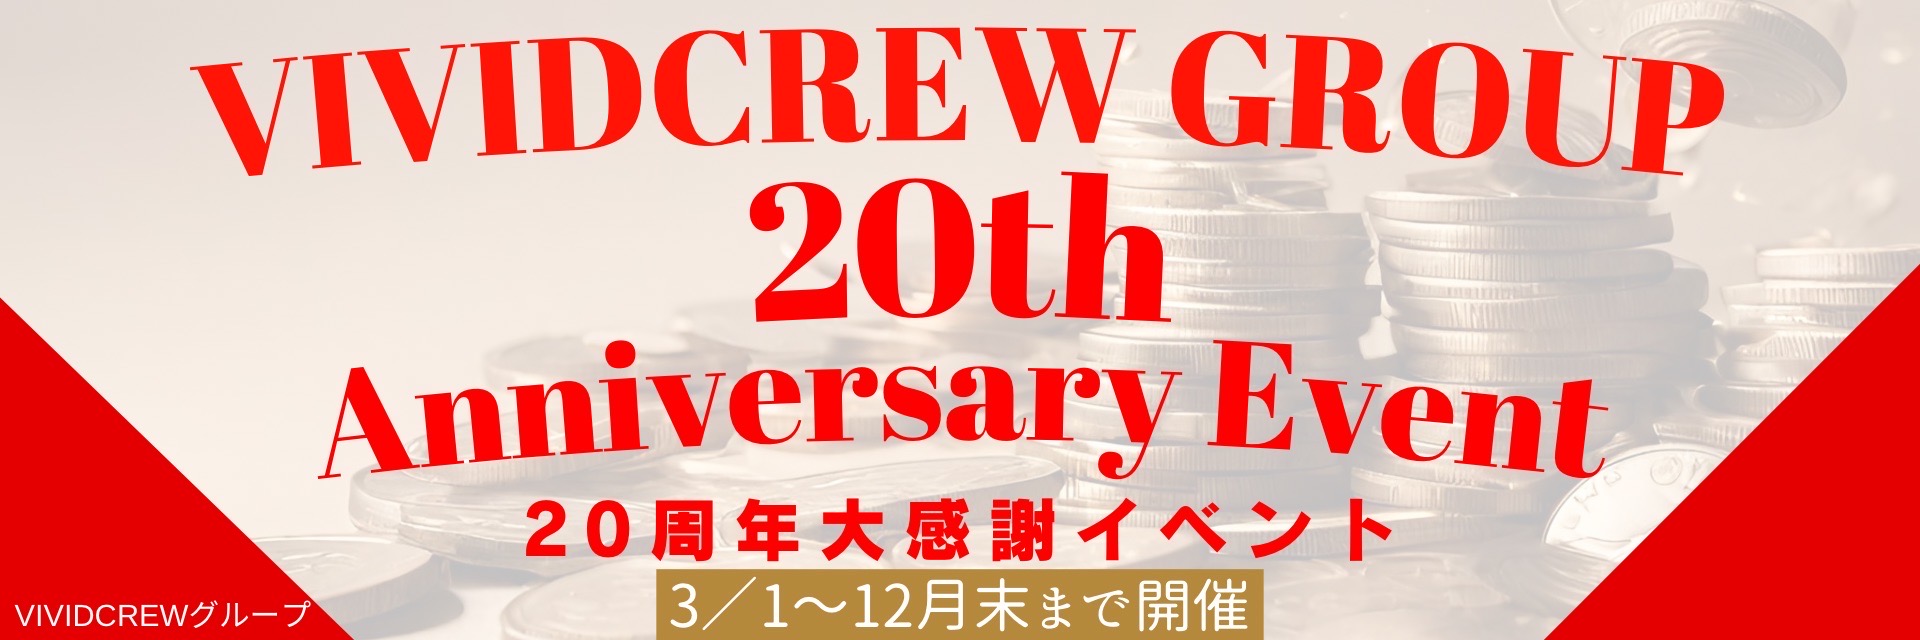 vividcrew20th anniversary EVENT♡